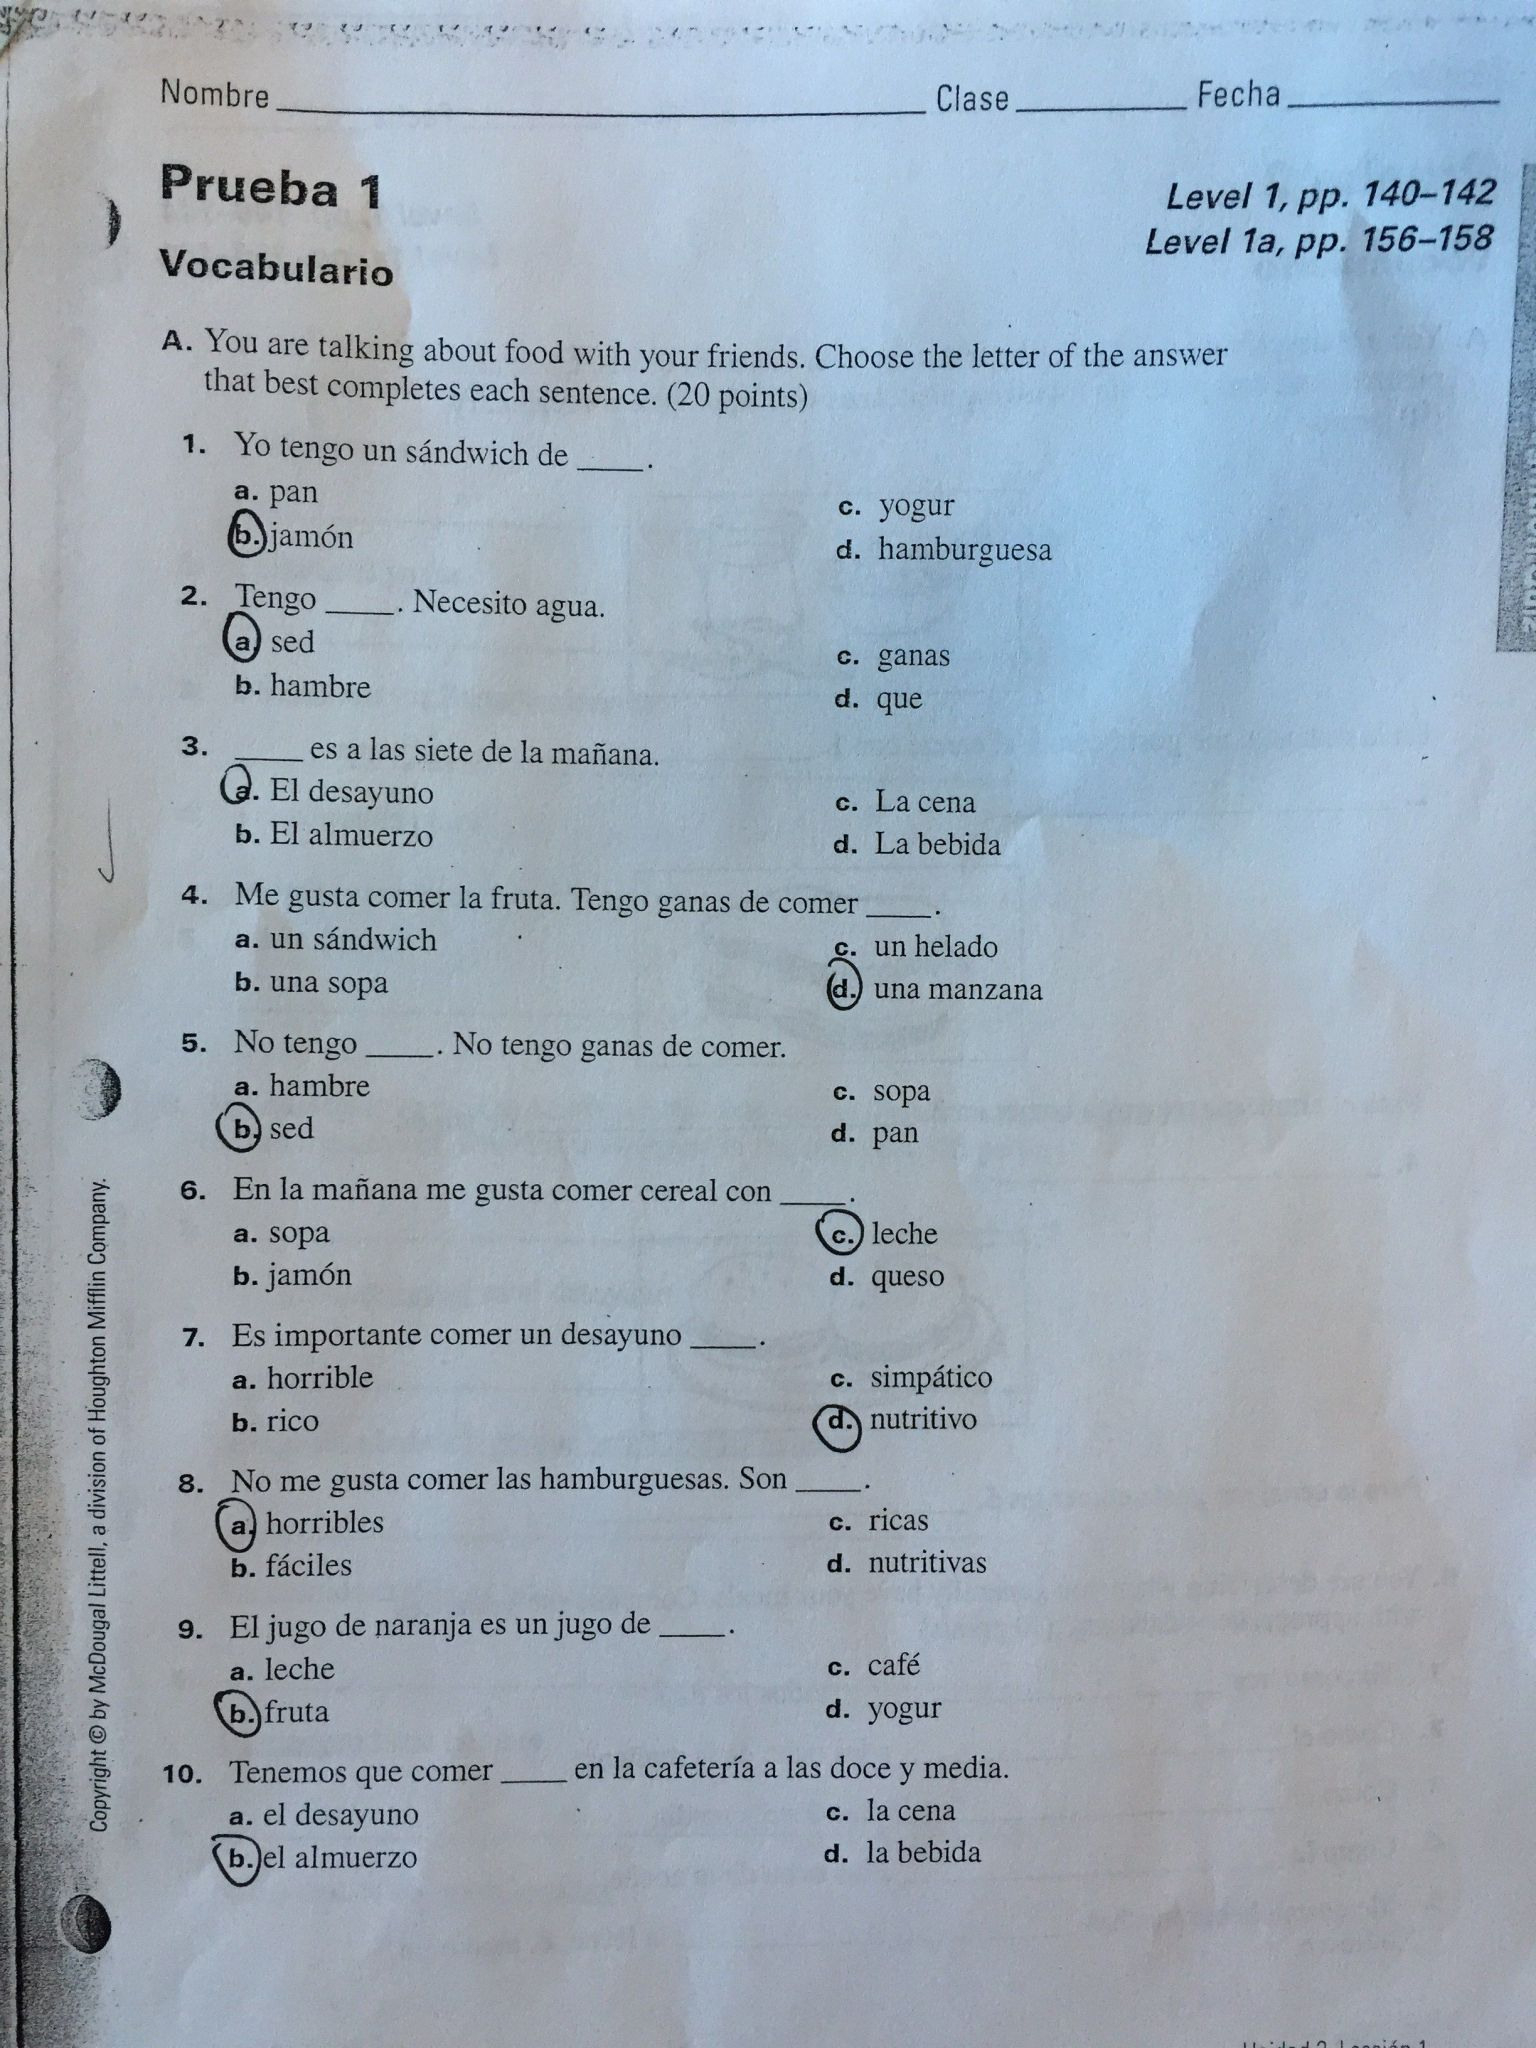 Tener Worksheet Spanish 1 Answers db excel com